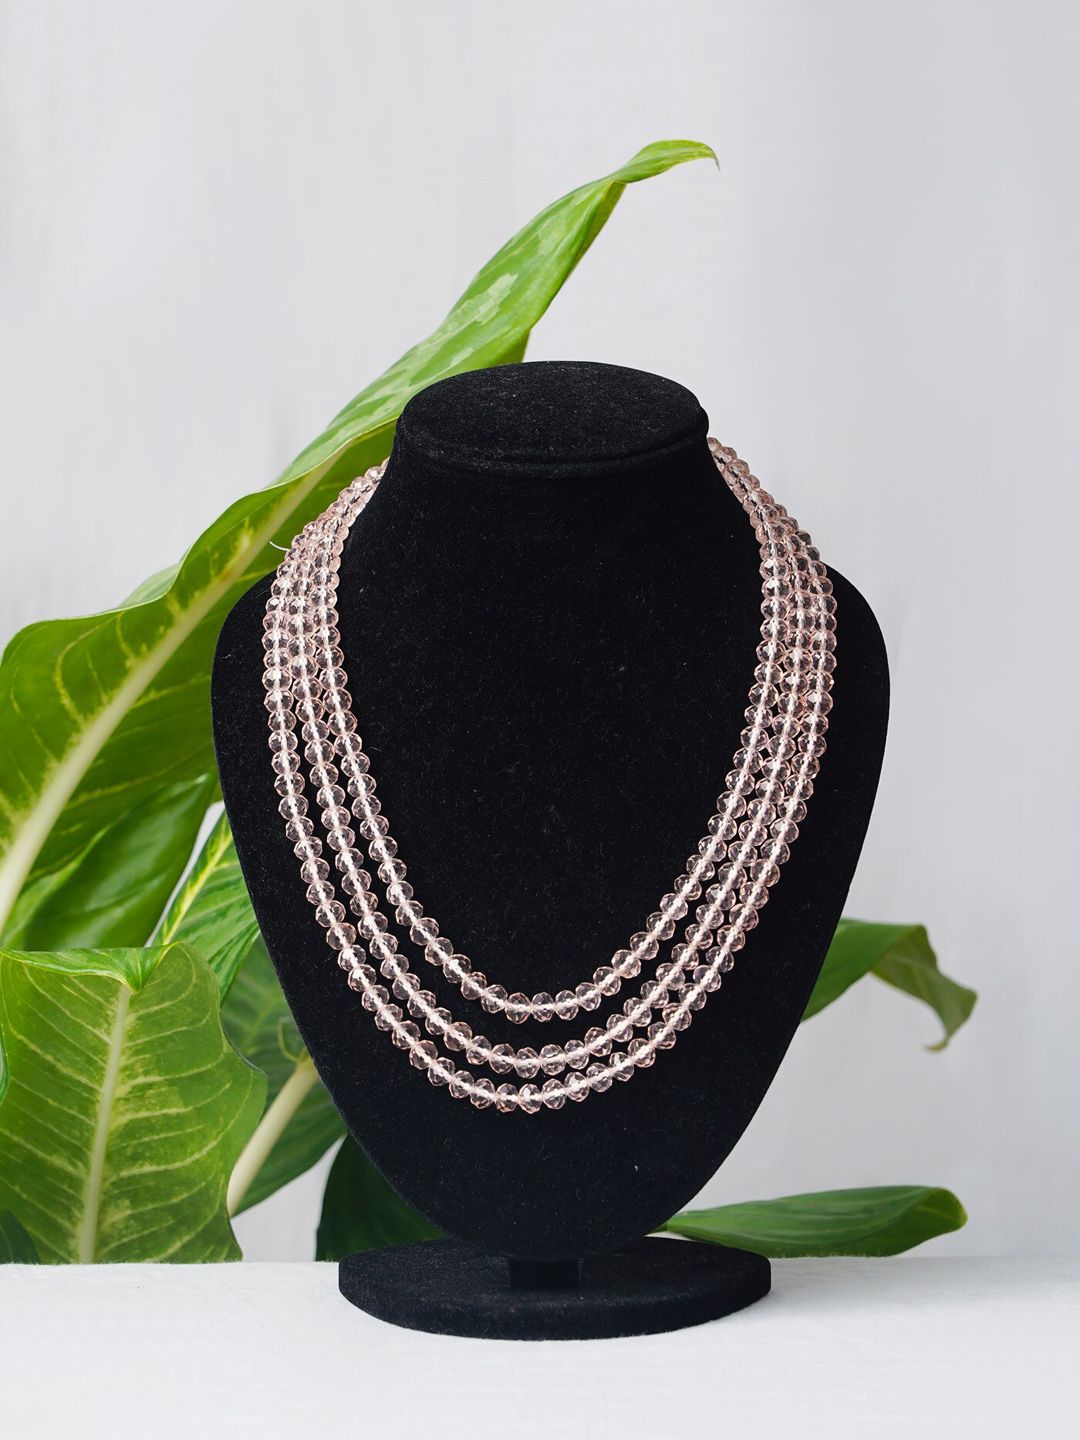 Unnati Silks Pink Amravati Ocean Beads Layered Necklace Price in India